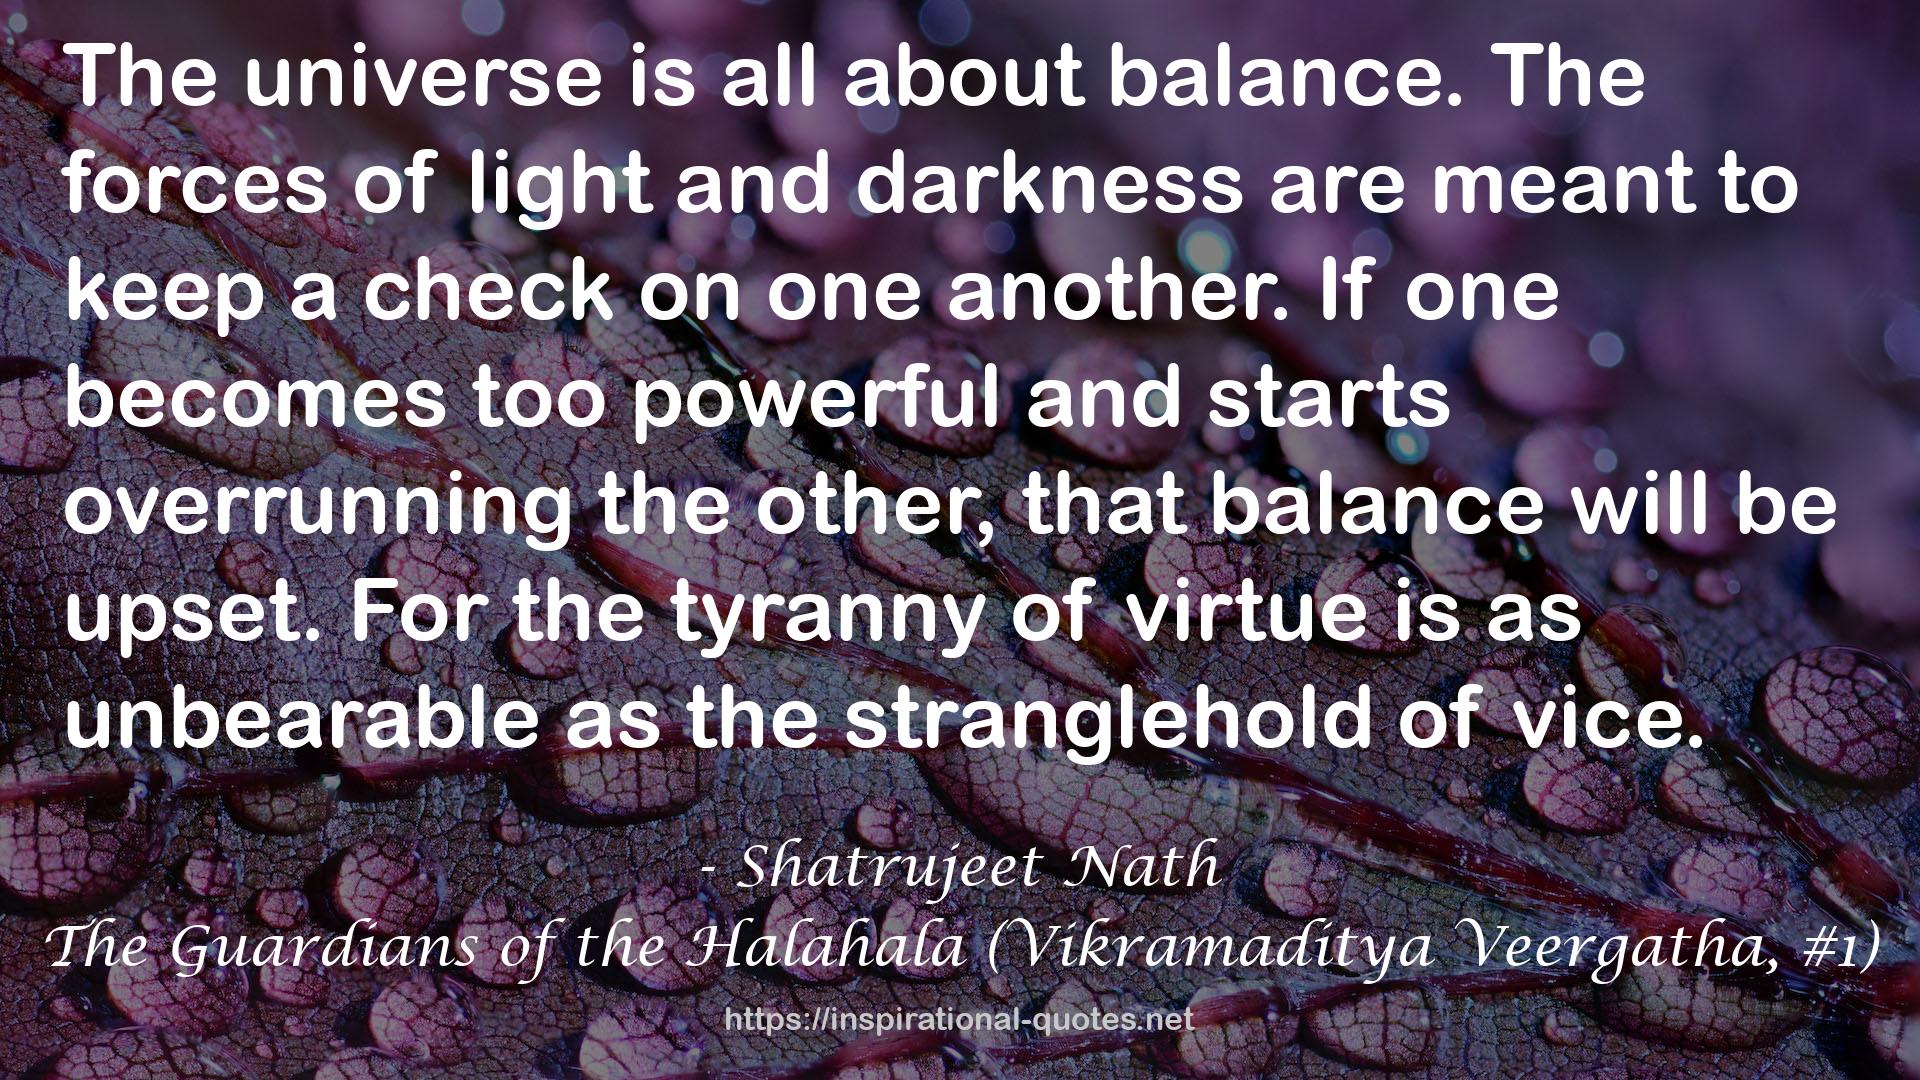 The Guardians of the Halahala (Vikramaditya Veergatha, #1) QUOTES